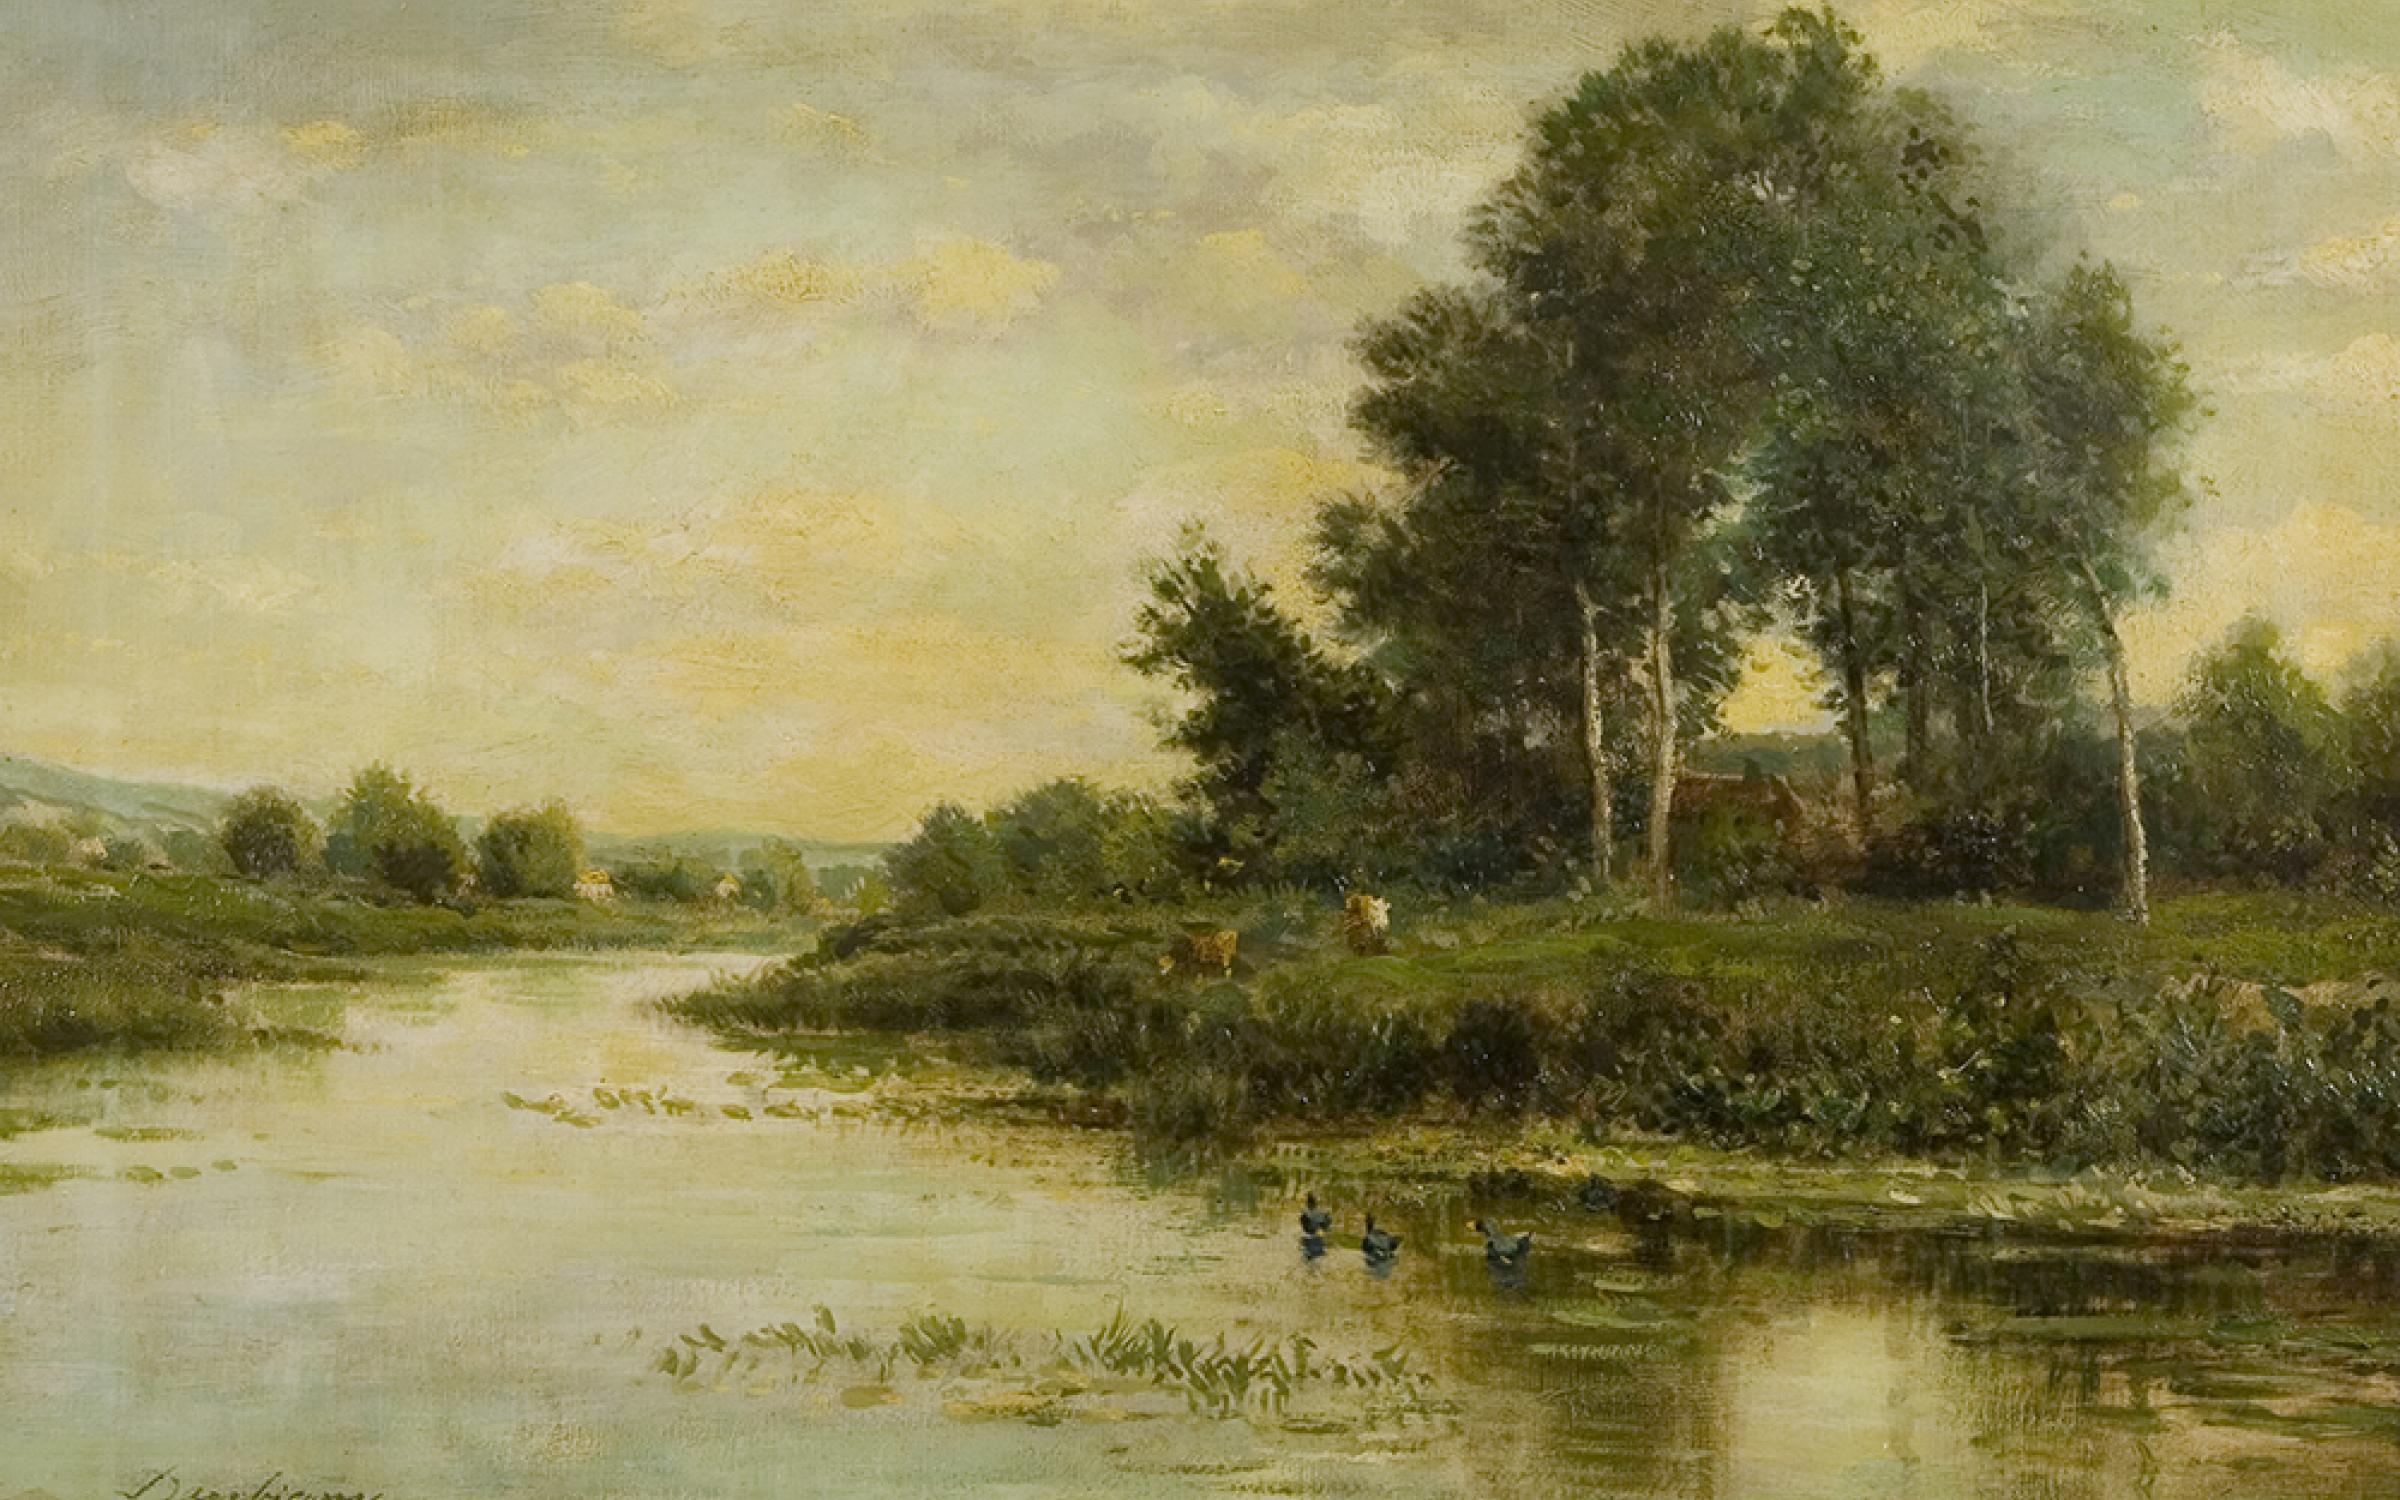 Charles Francois Daubigny (1817-1878), French, “The River,” oil on canvas, gift of Edward Bartlett Wicks, UMFA1926.010.